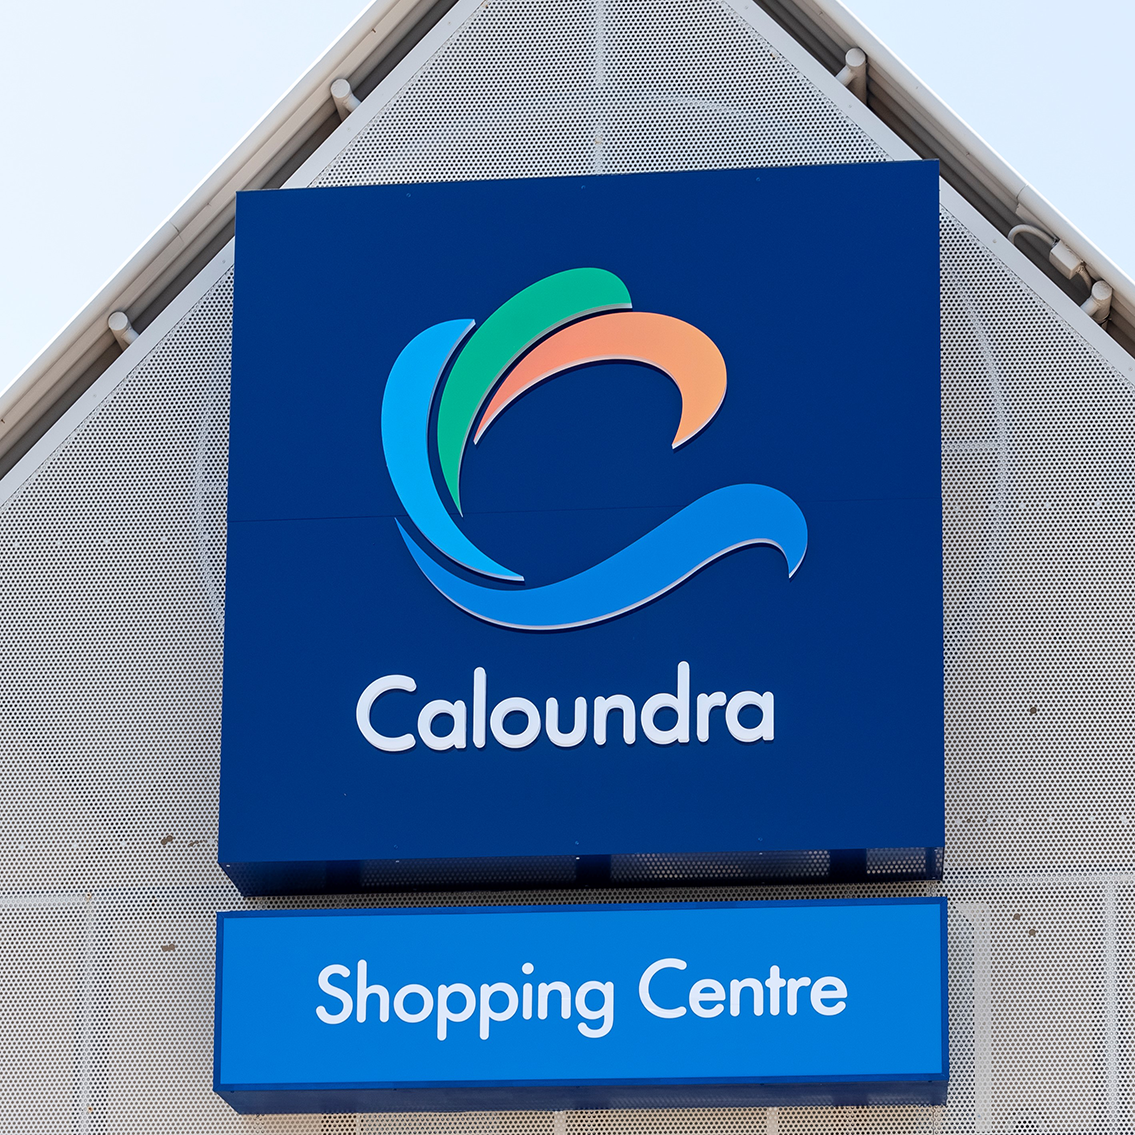 Caloundra Shopping Centre new name and brand